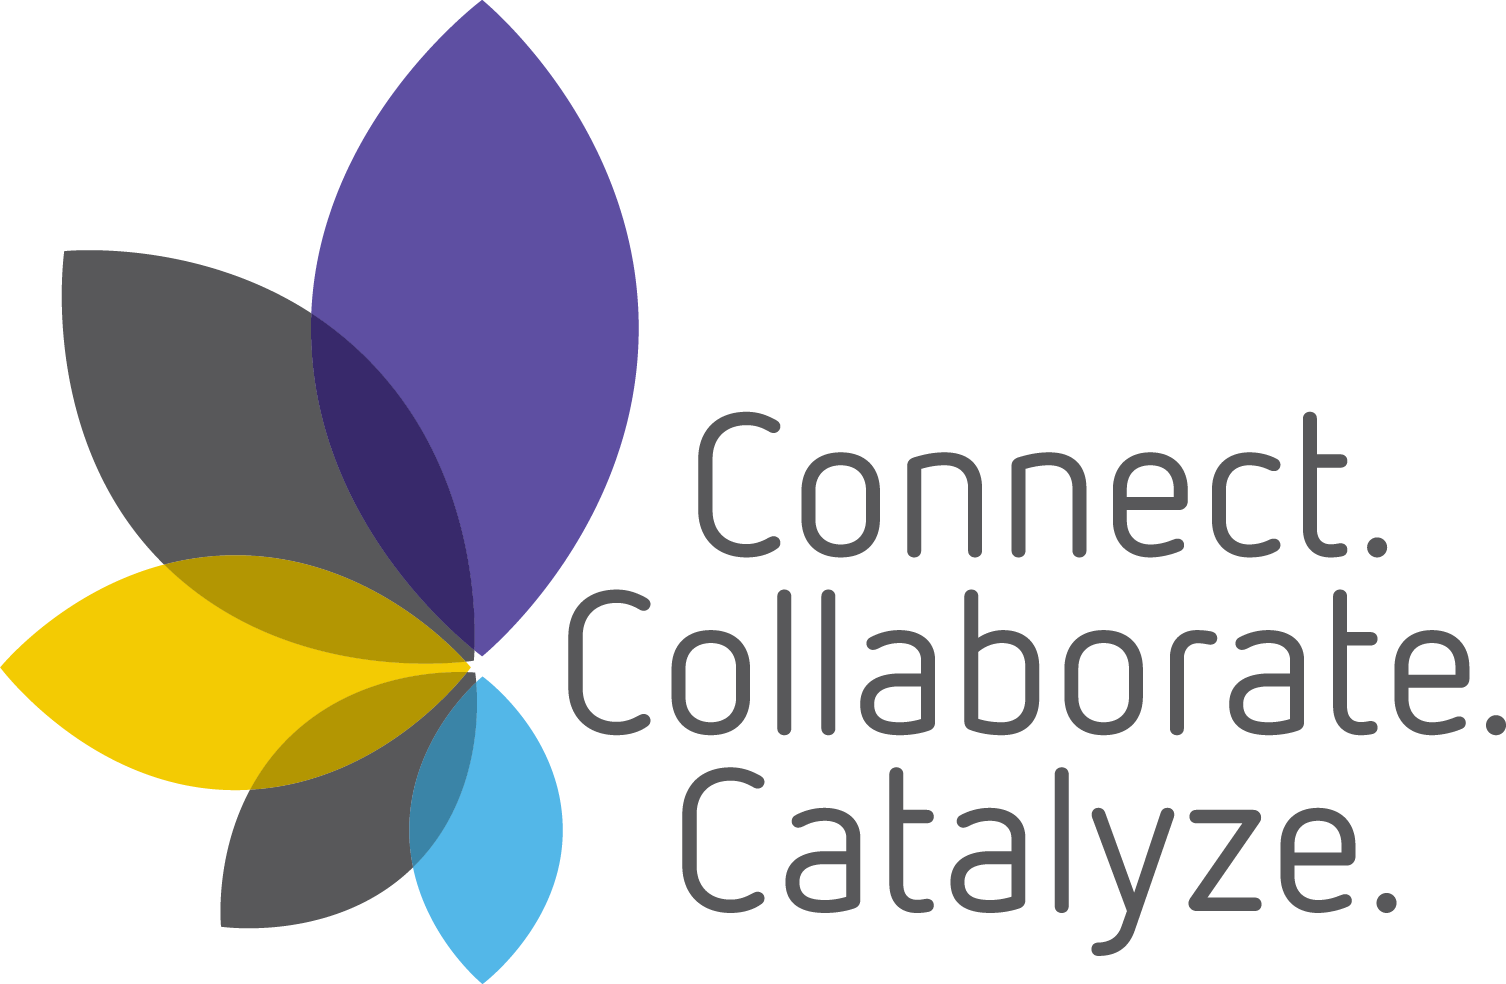 Connect. Collaborate. Catalyze.